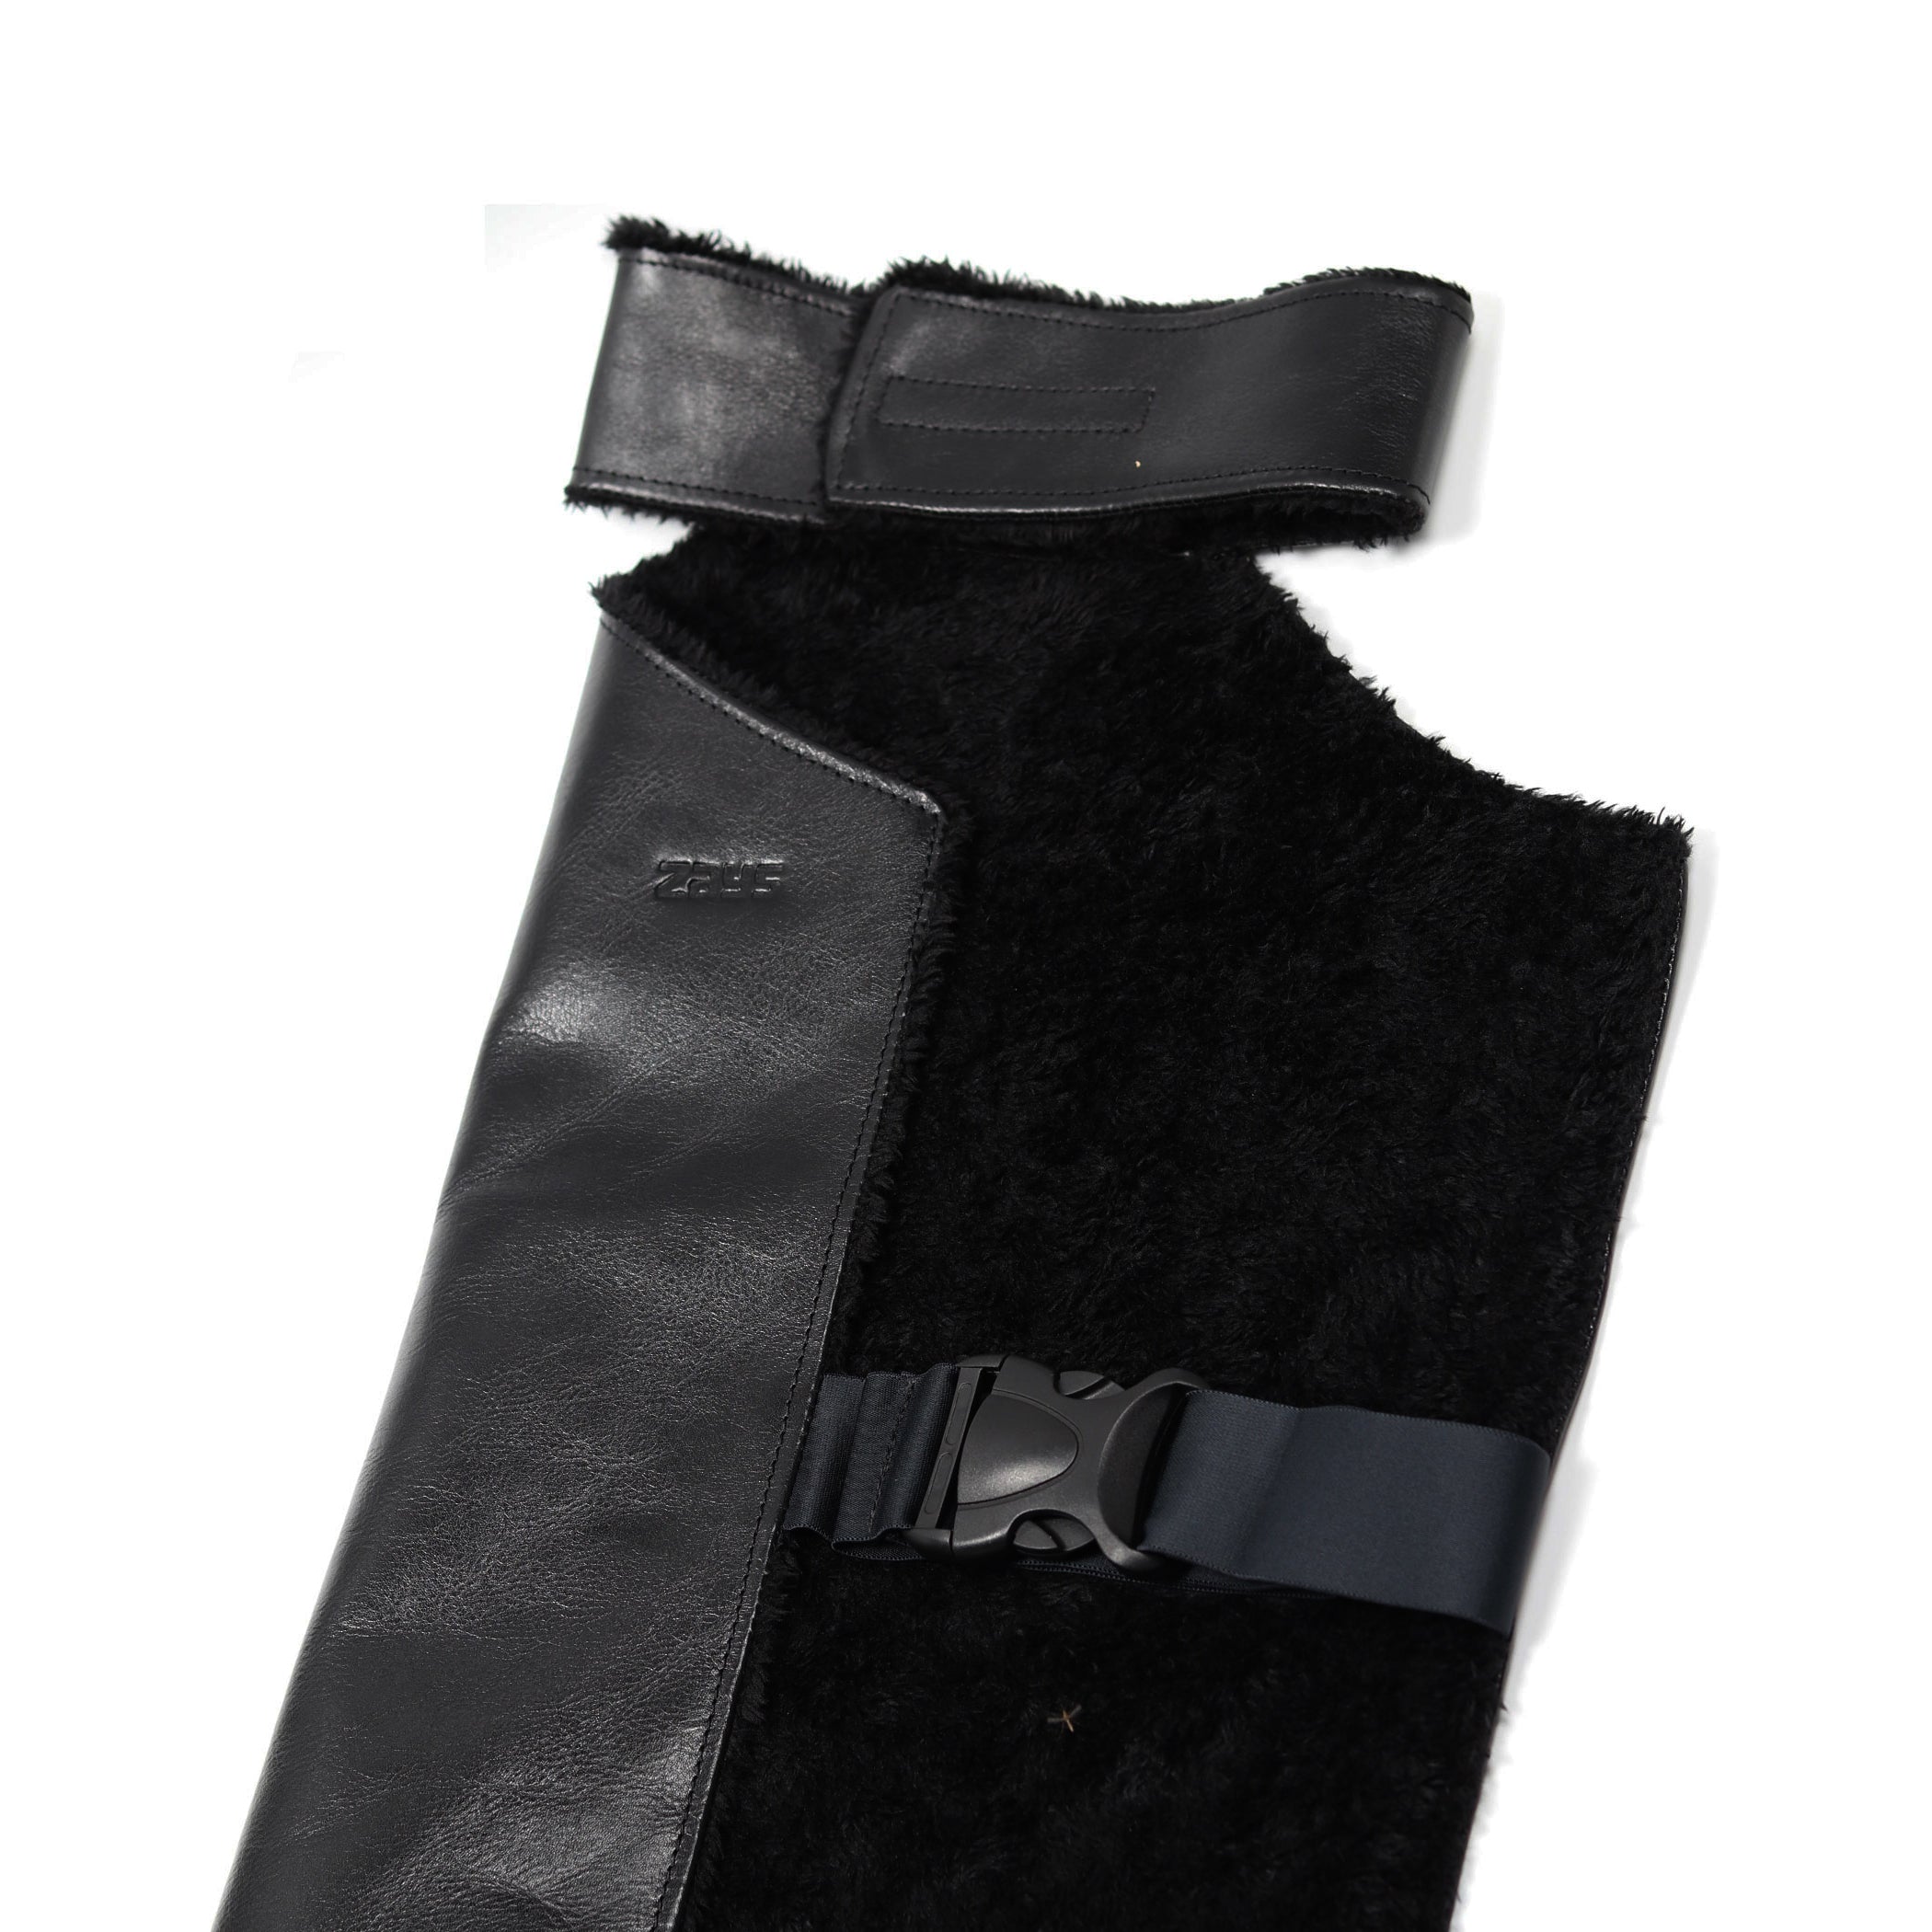 Zays Premium Leather Chest Guard Winter Protection For Biker (Black) - ZAYSCG01